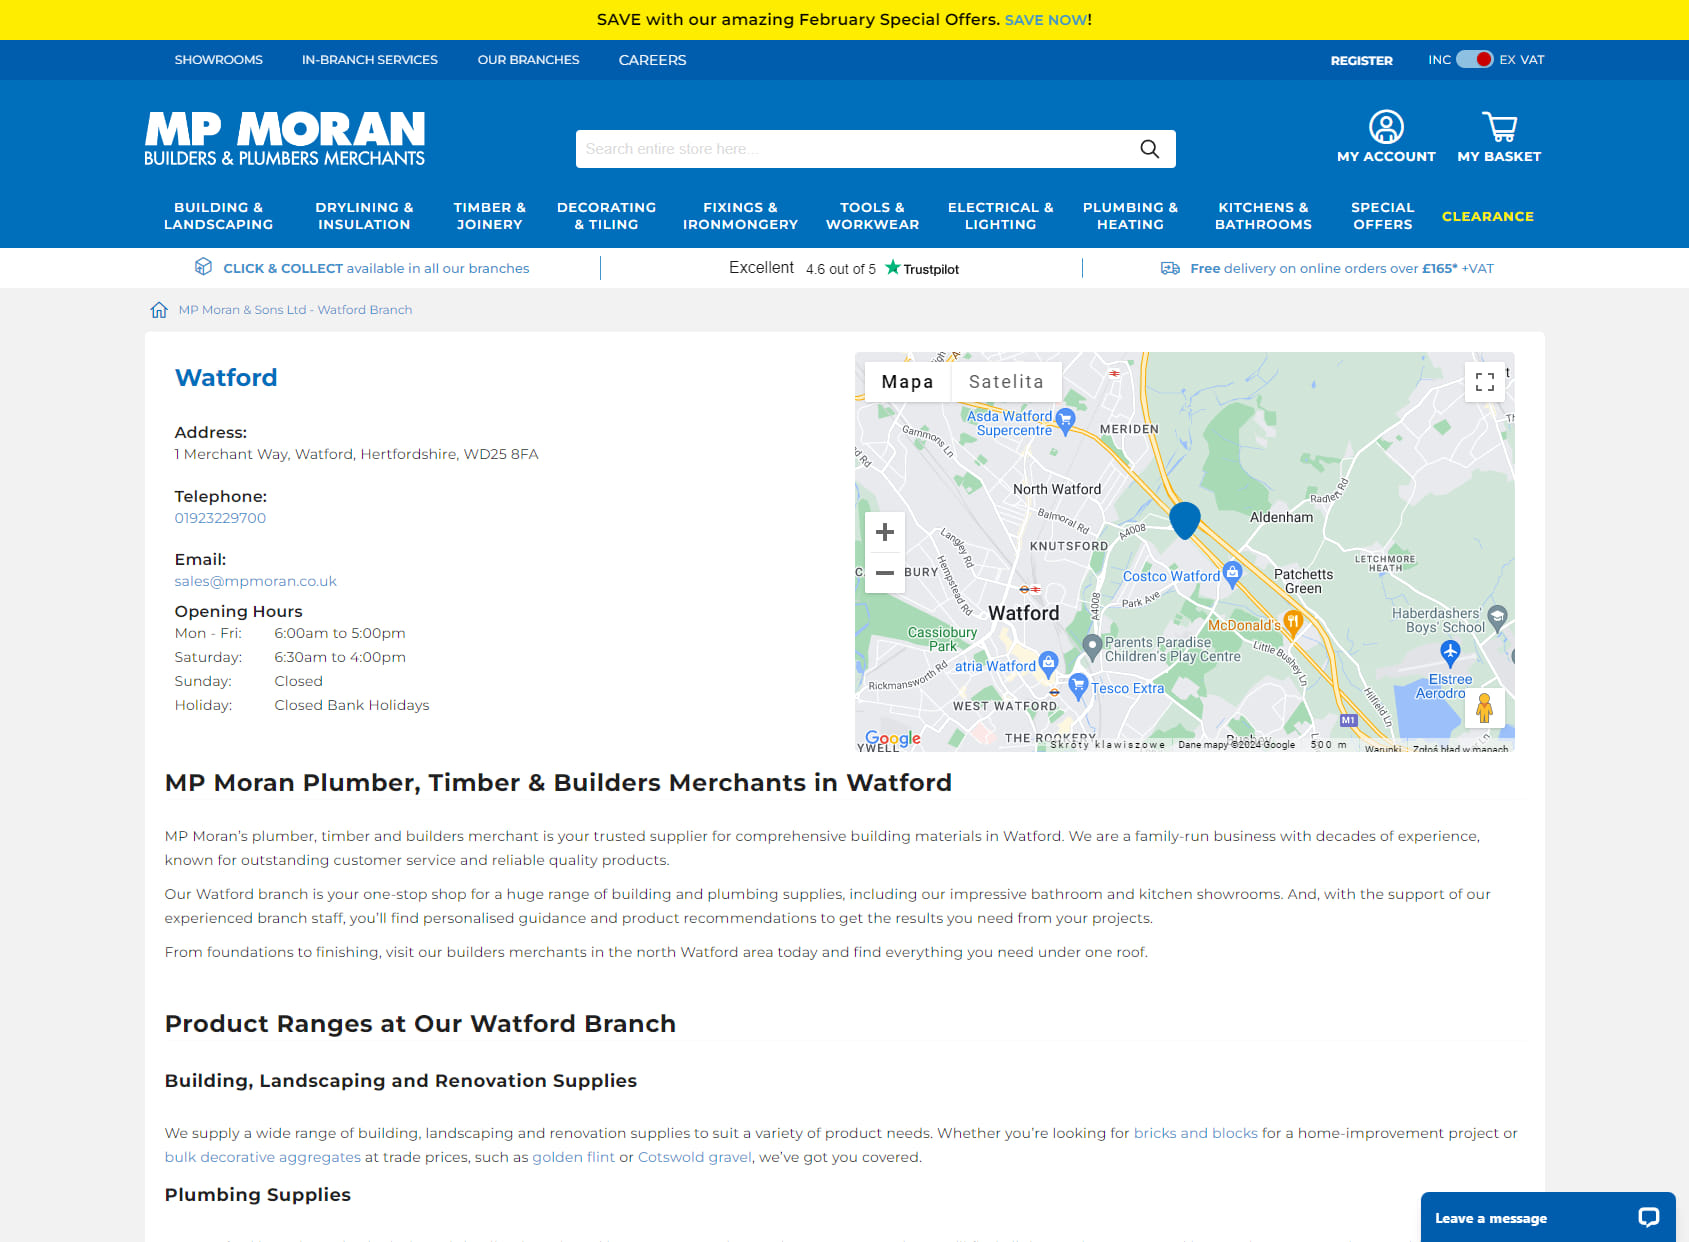 MP Moran & Sons Ltd - Watford Branch